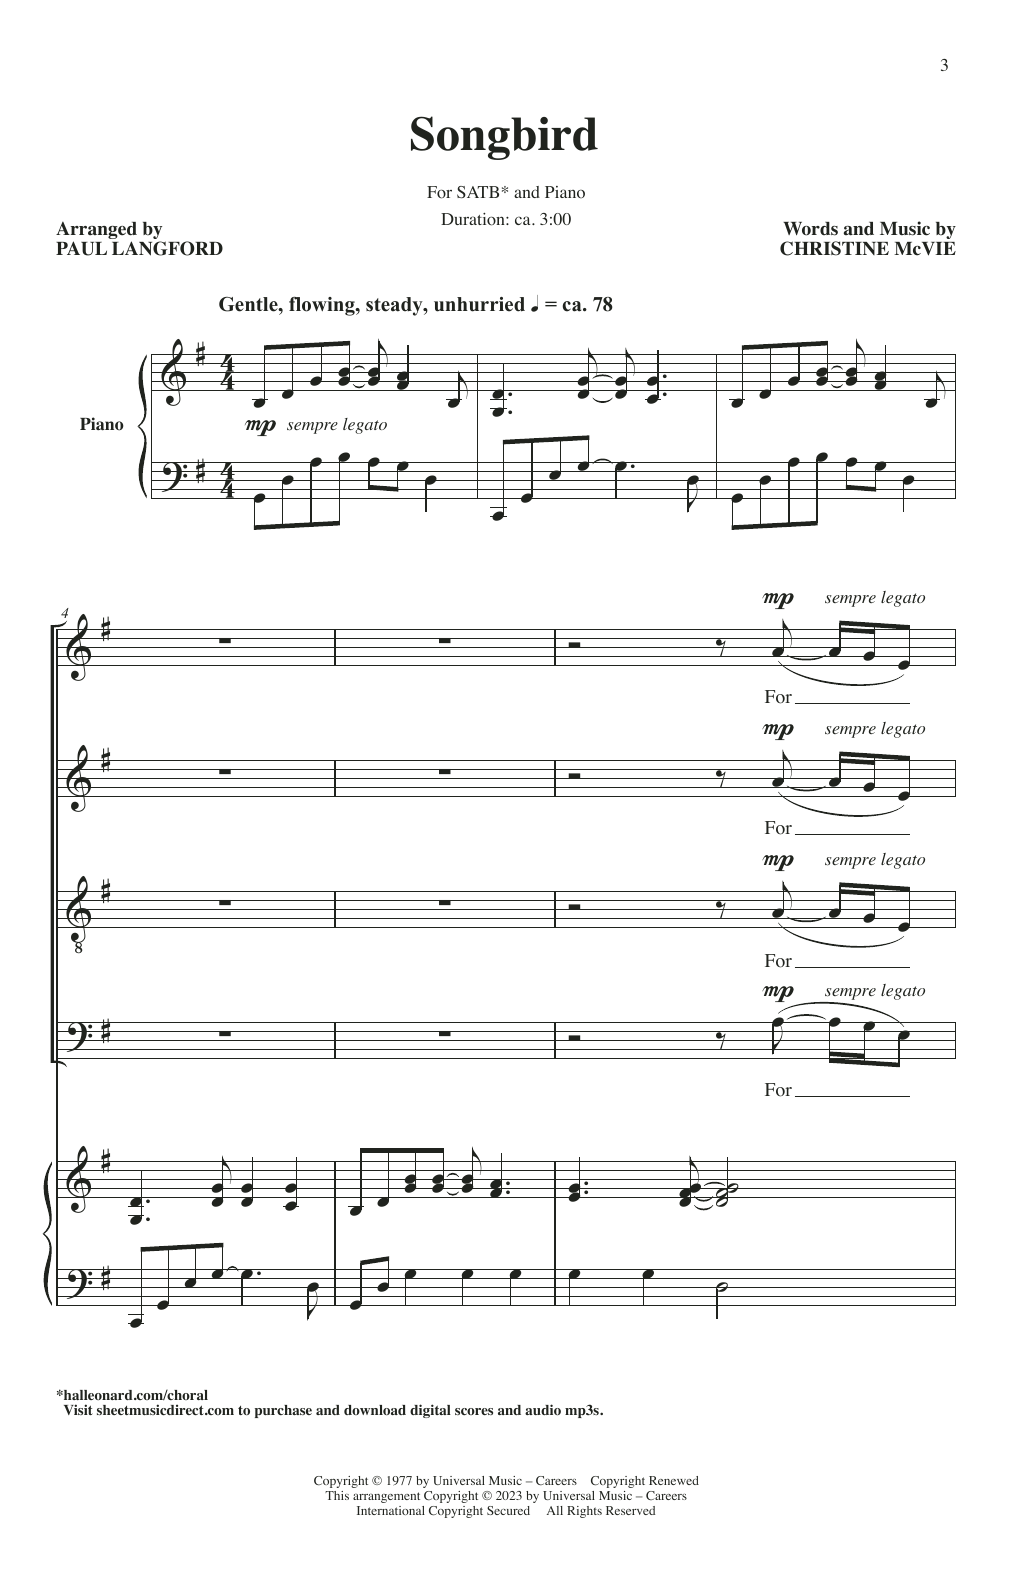 Eva Cassidy Songbird (arr. Paul Langford) Sheet Music Notes & Chords for SATB Choir - Download or Print PDF